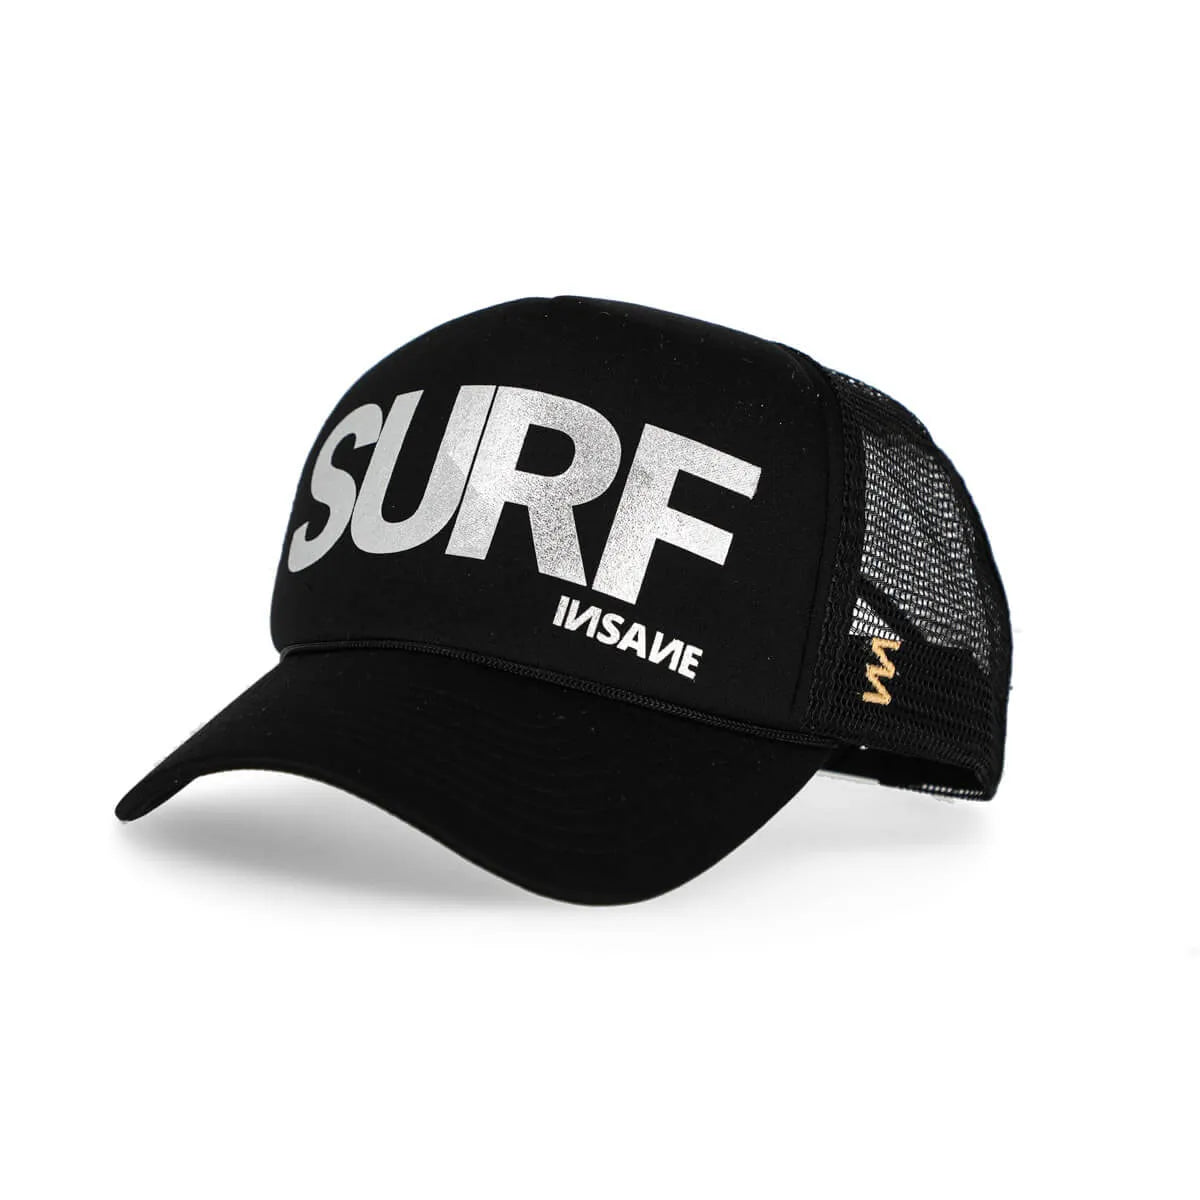 SURF TRUCKER BLACK & SILVER CAP